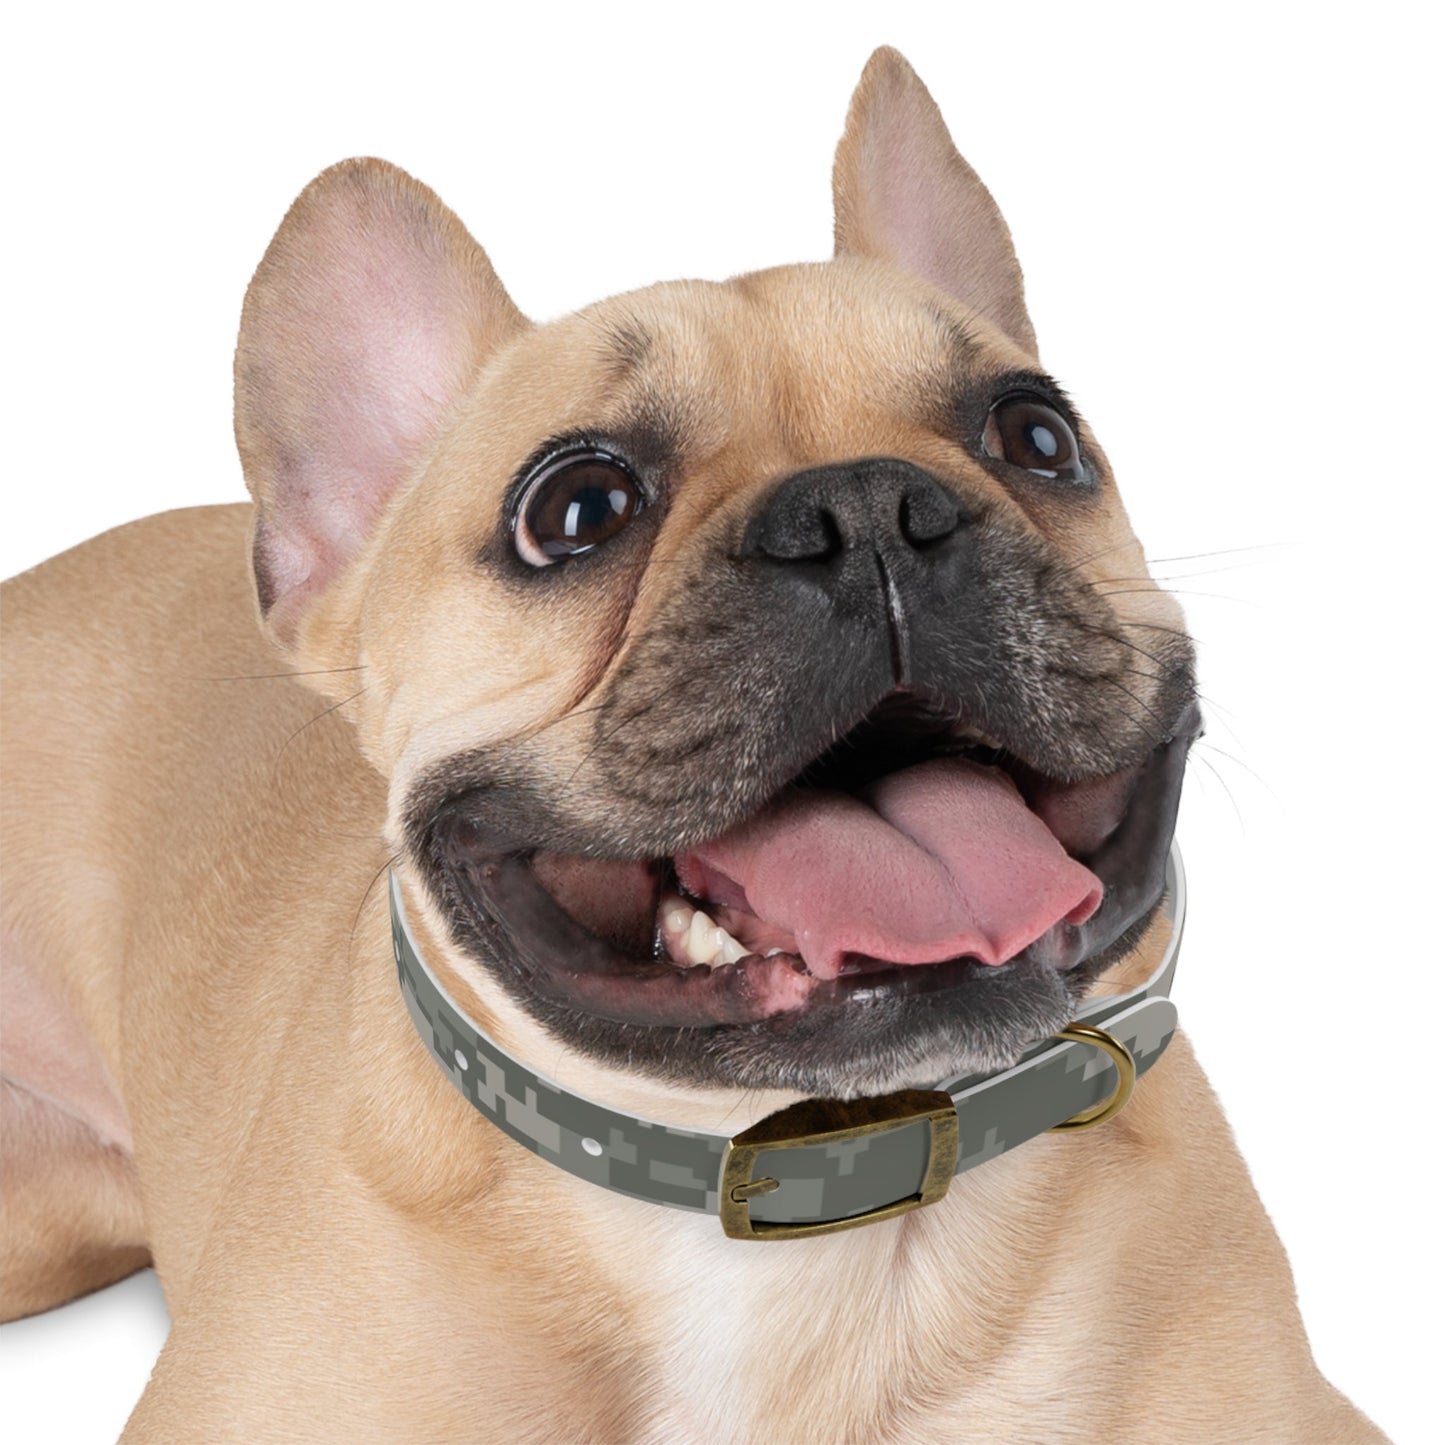 Military Design Dog Collar-Shalav5